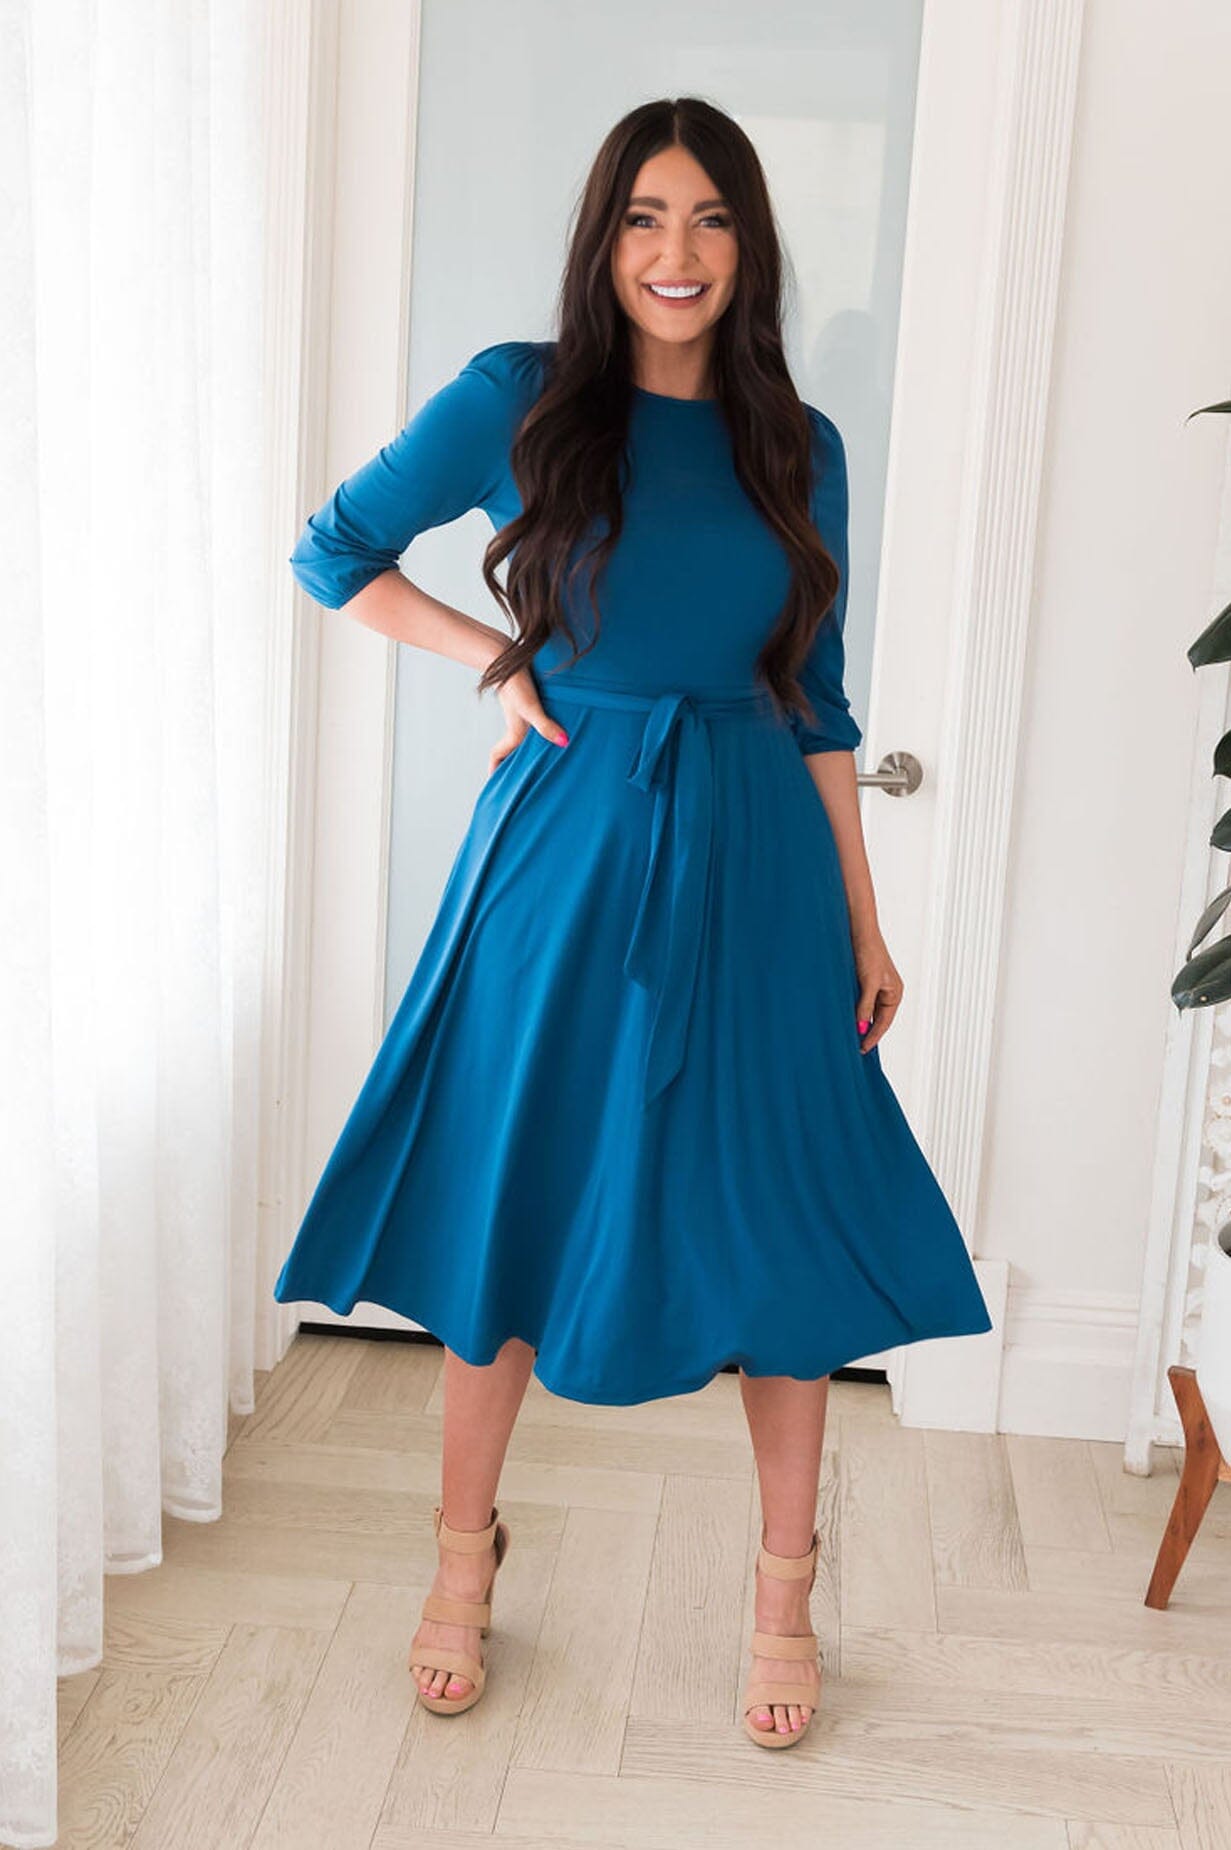 Modest Swing Dresses for Women - Online Boutique - NeeSee's Dresses